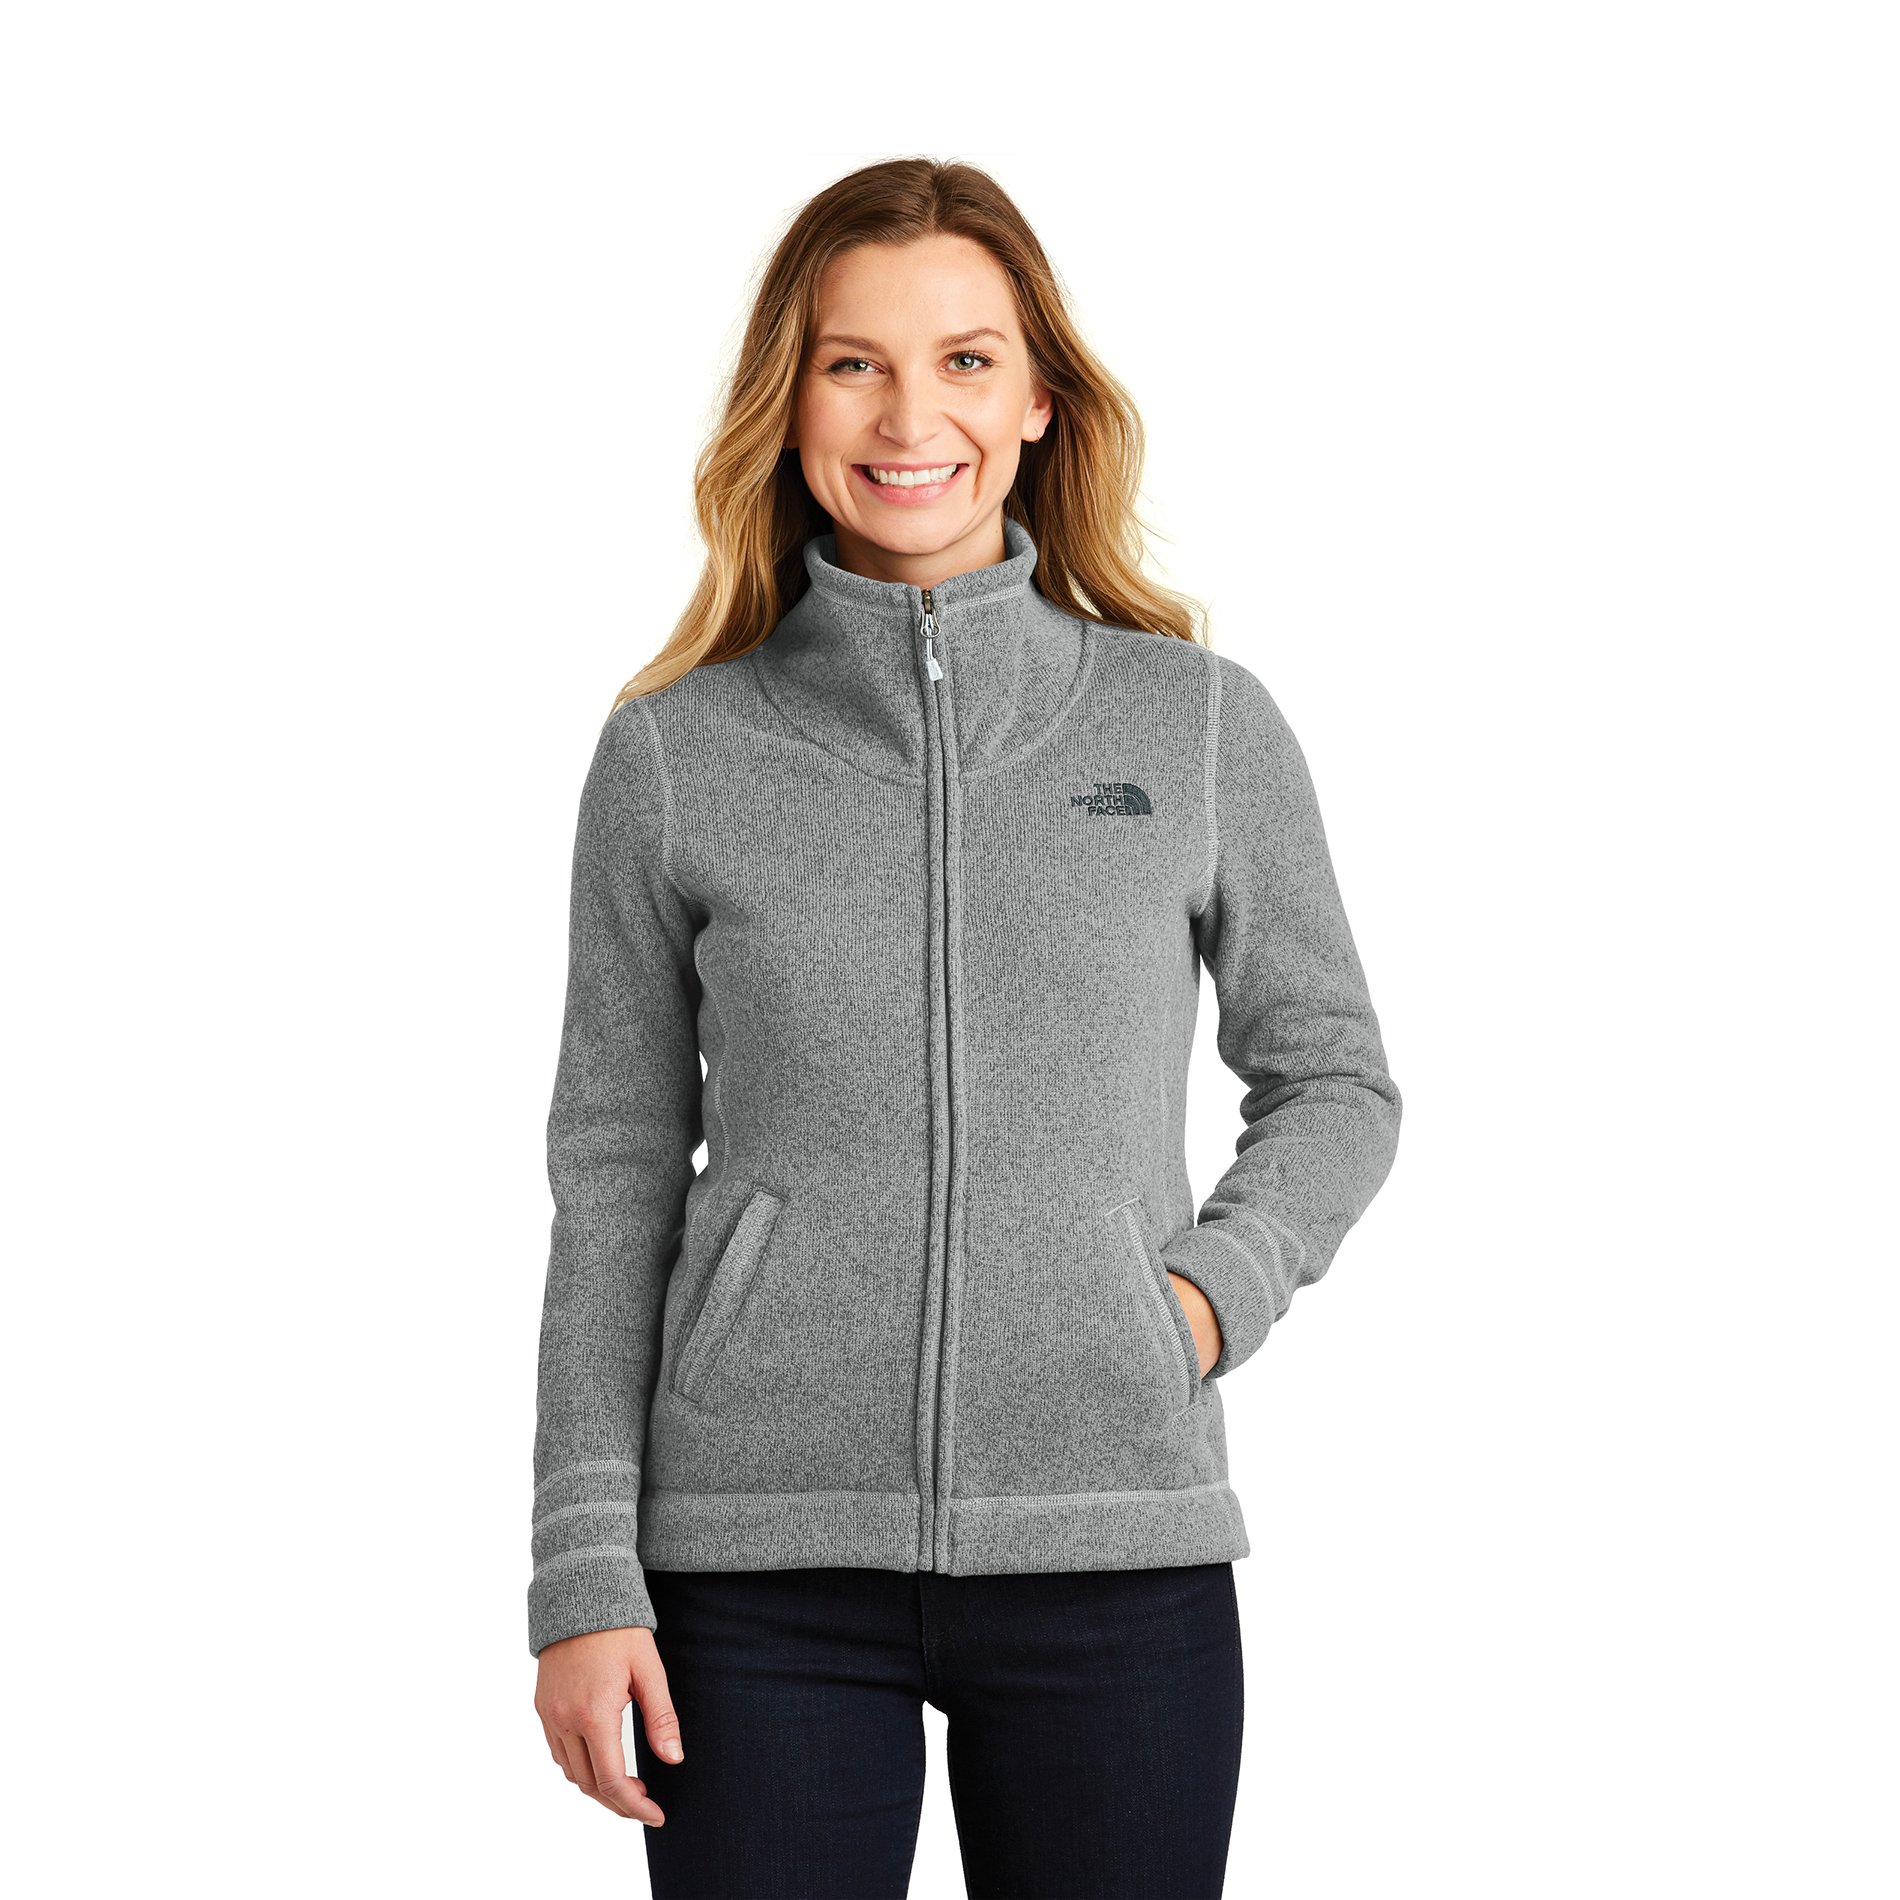 Customized The North Face Sweater Fleece Jacket (Women's)